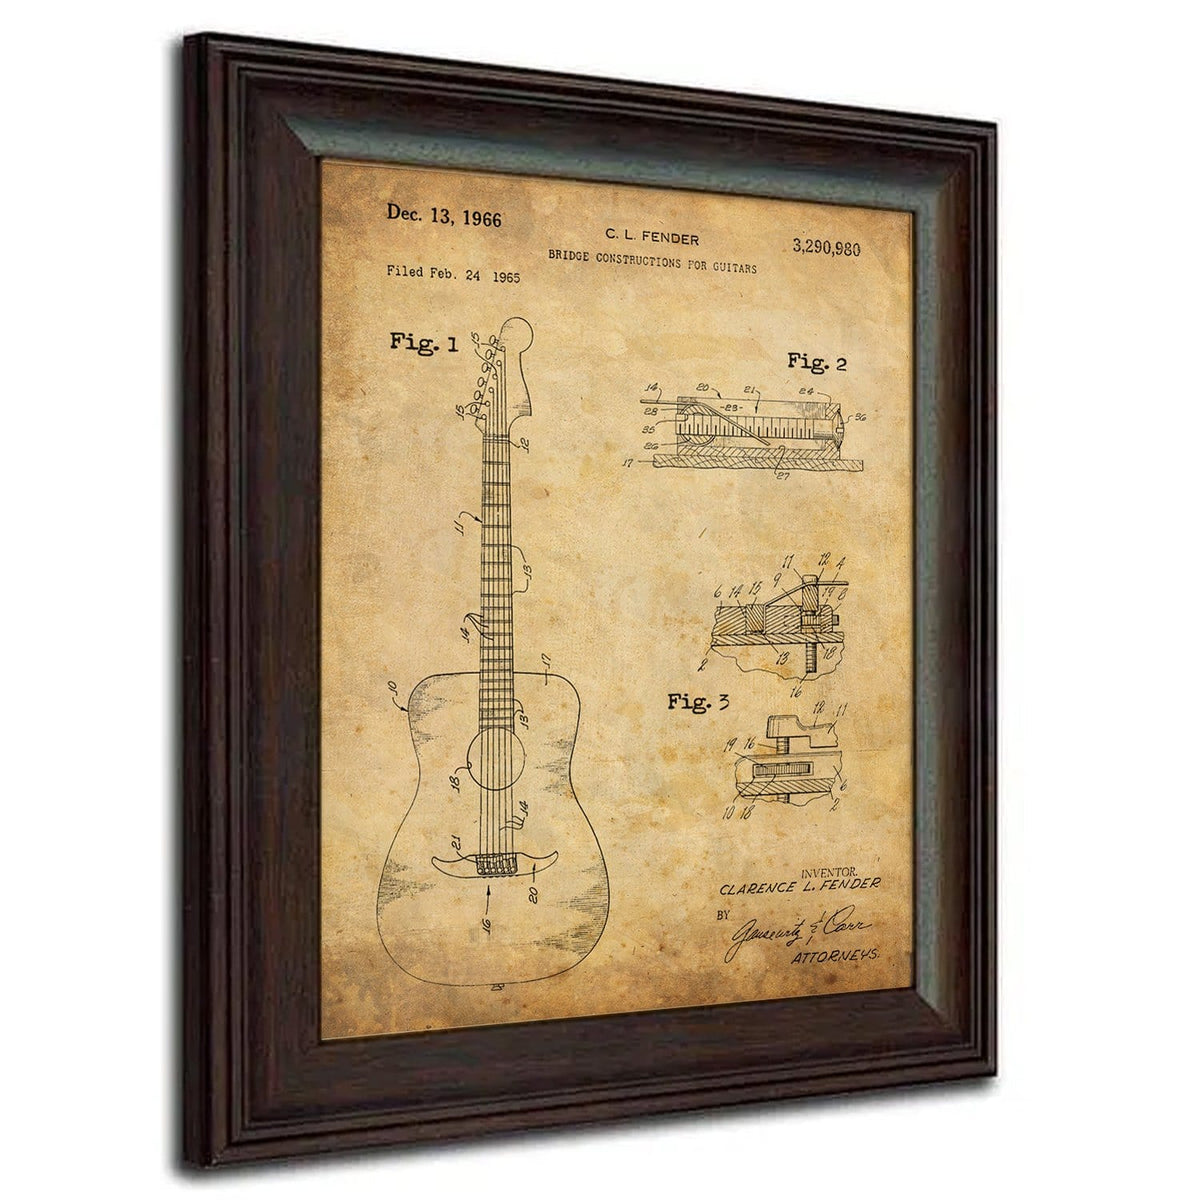 1965 Fender acoustic guitar patent drawing art